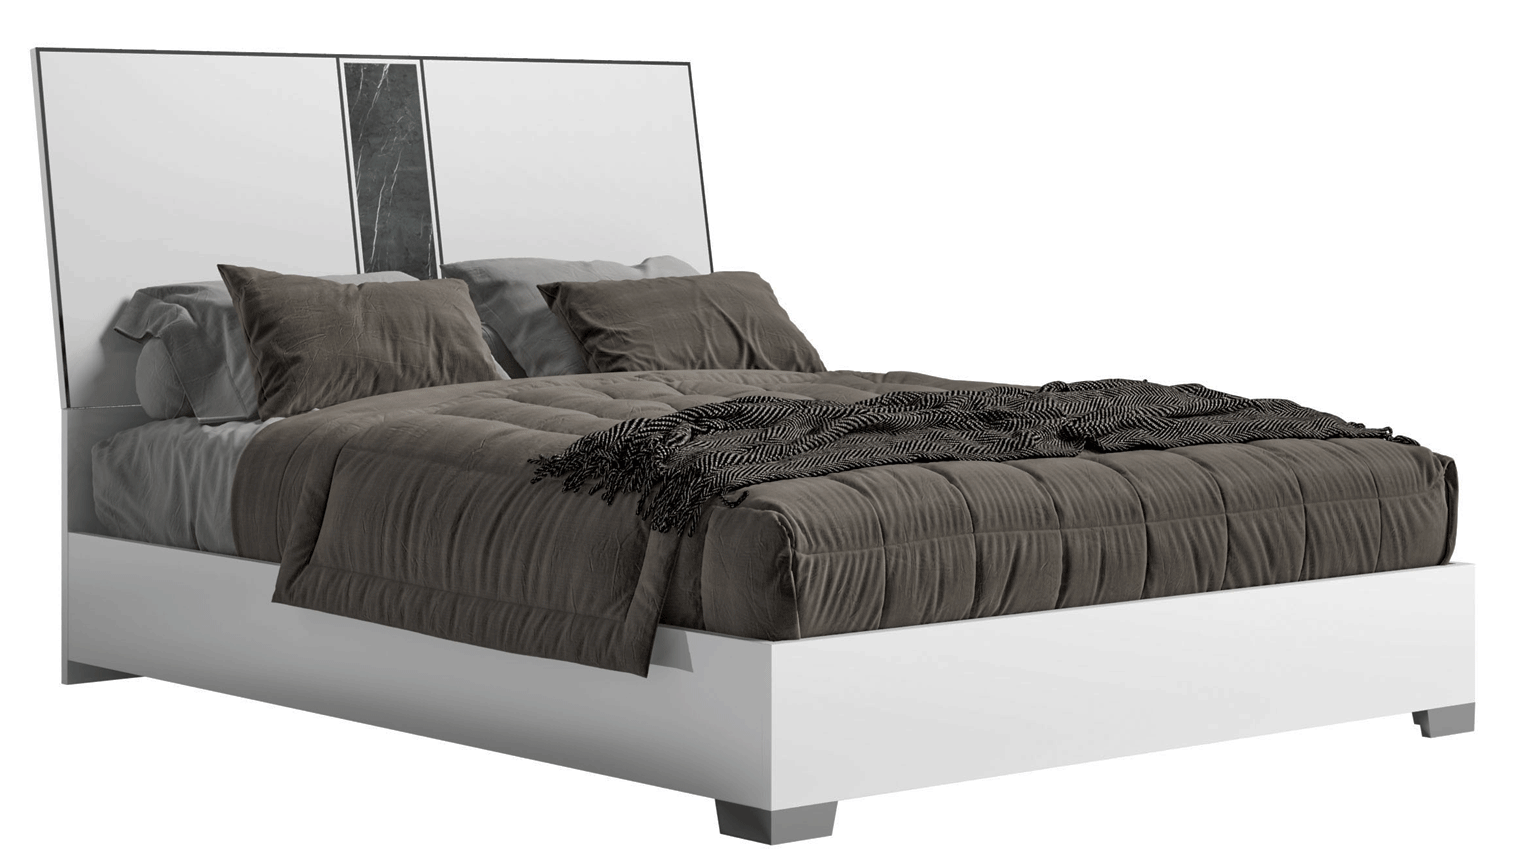 Bedroom Furniture Beds Bianca Marble Bed